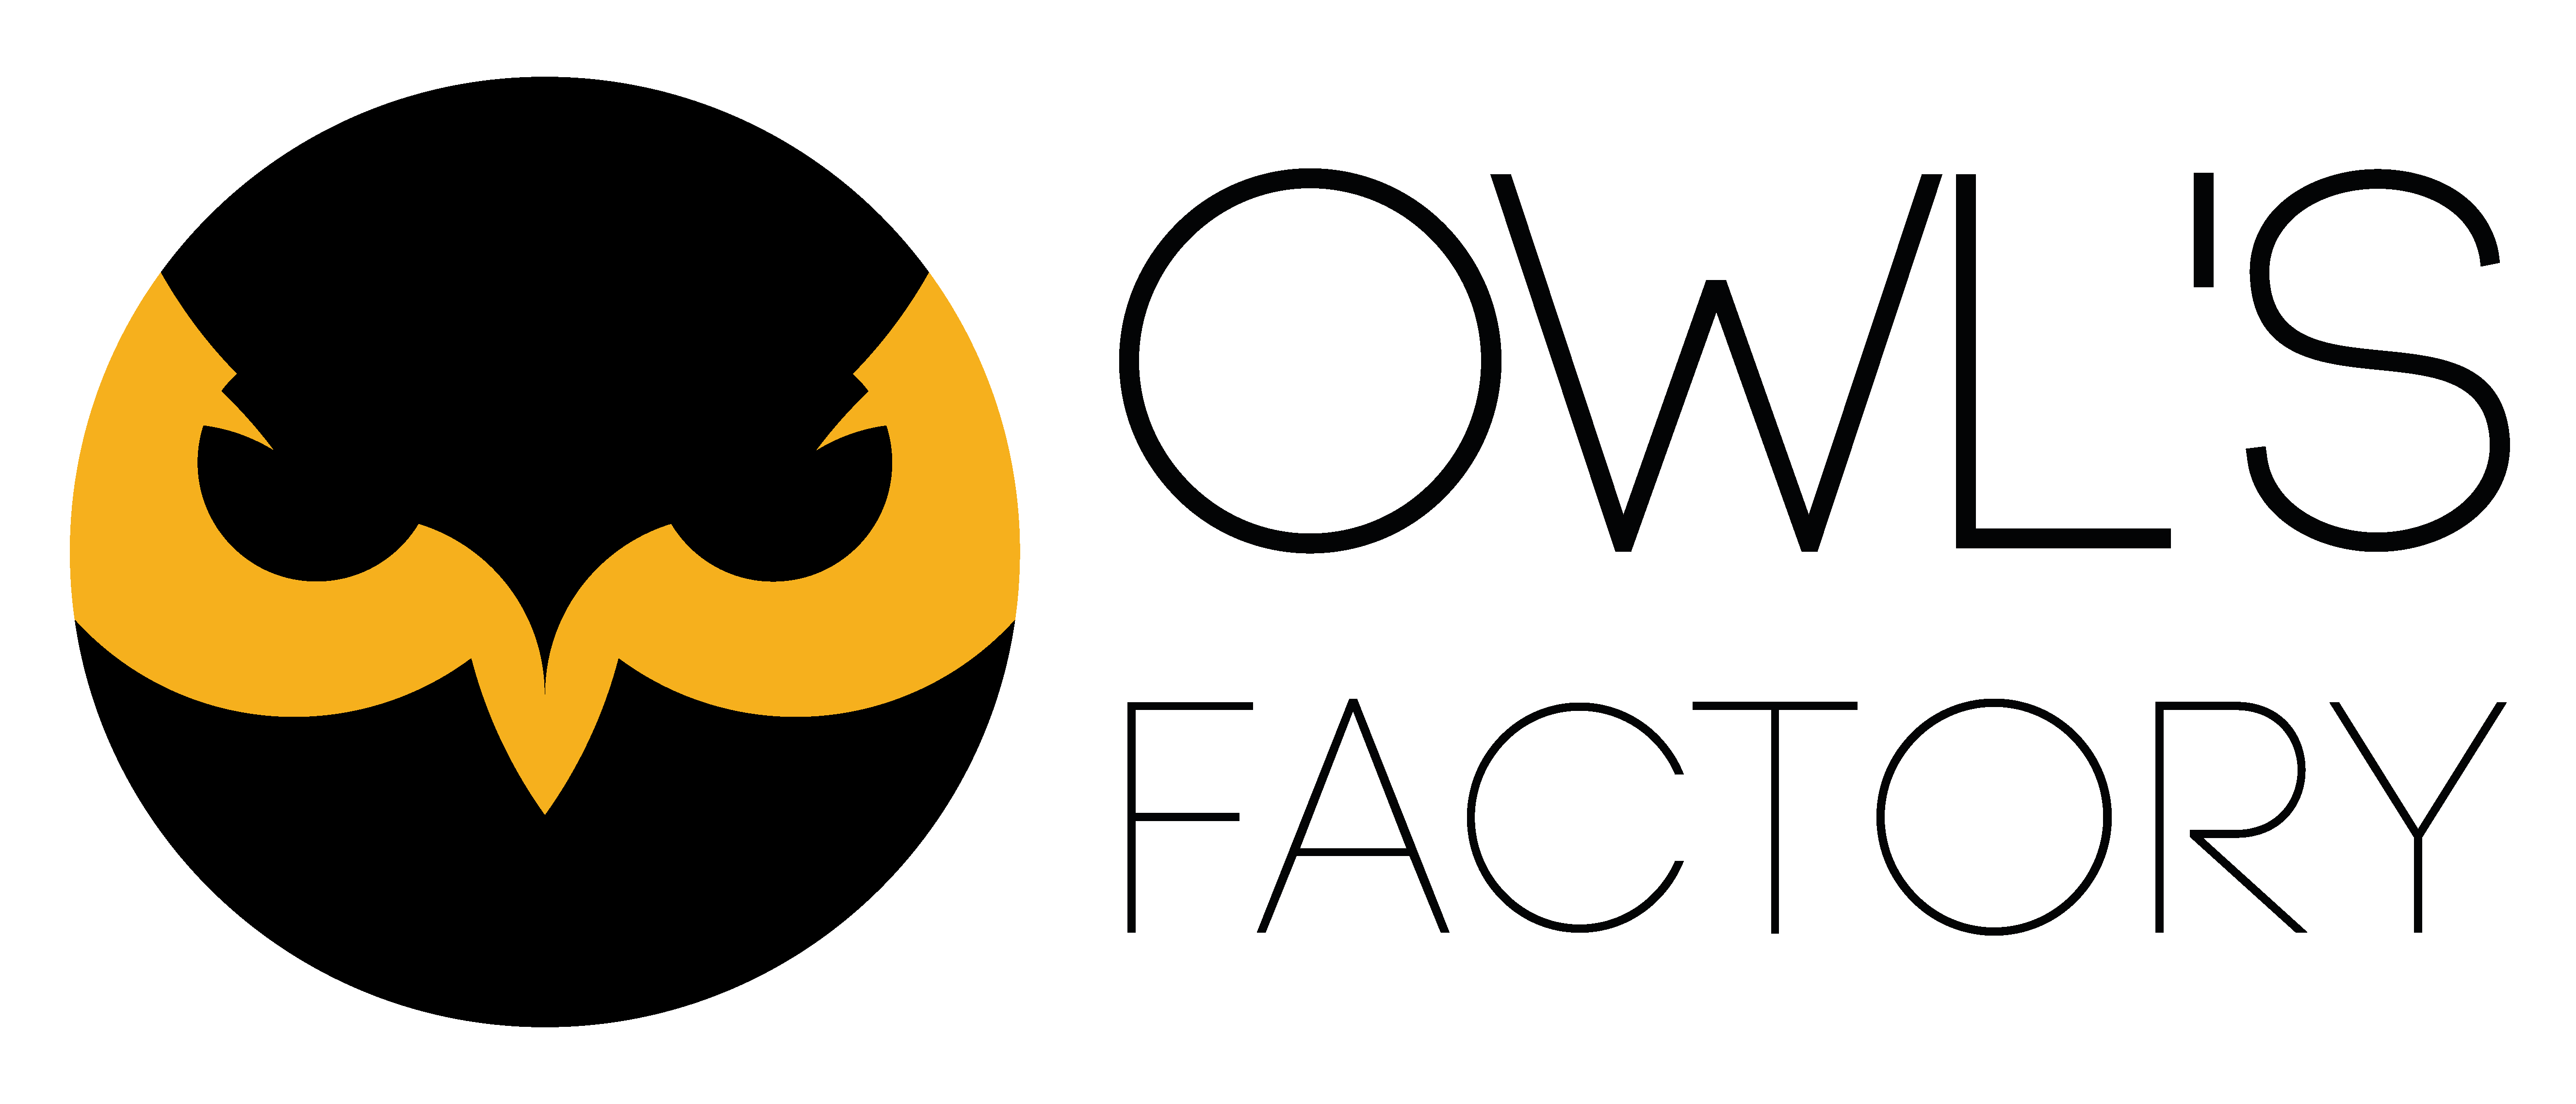 Owl's Factory